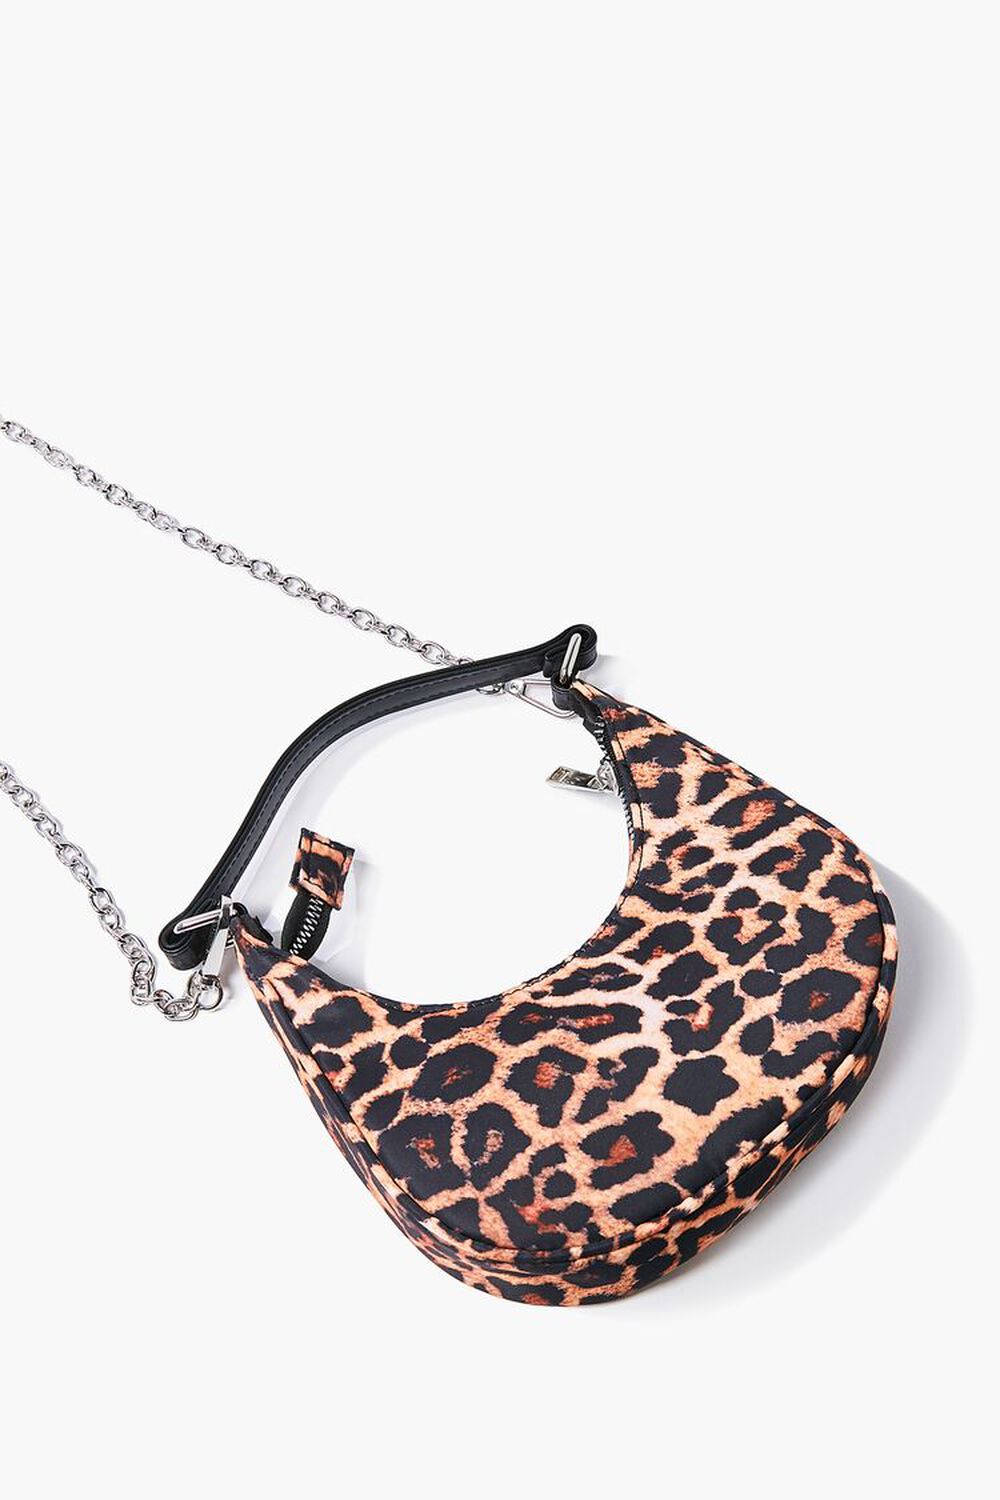 Leopard Print Nylon Crossbody Bag, image 3